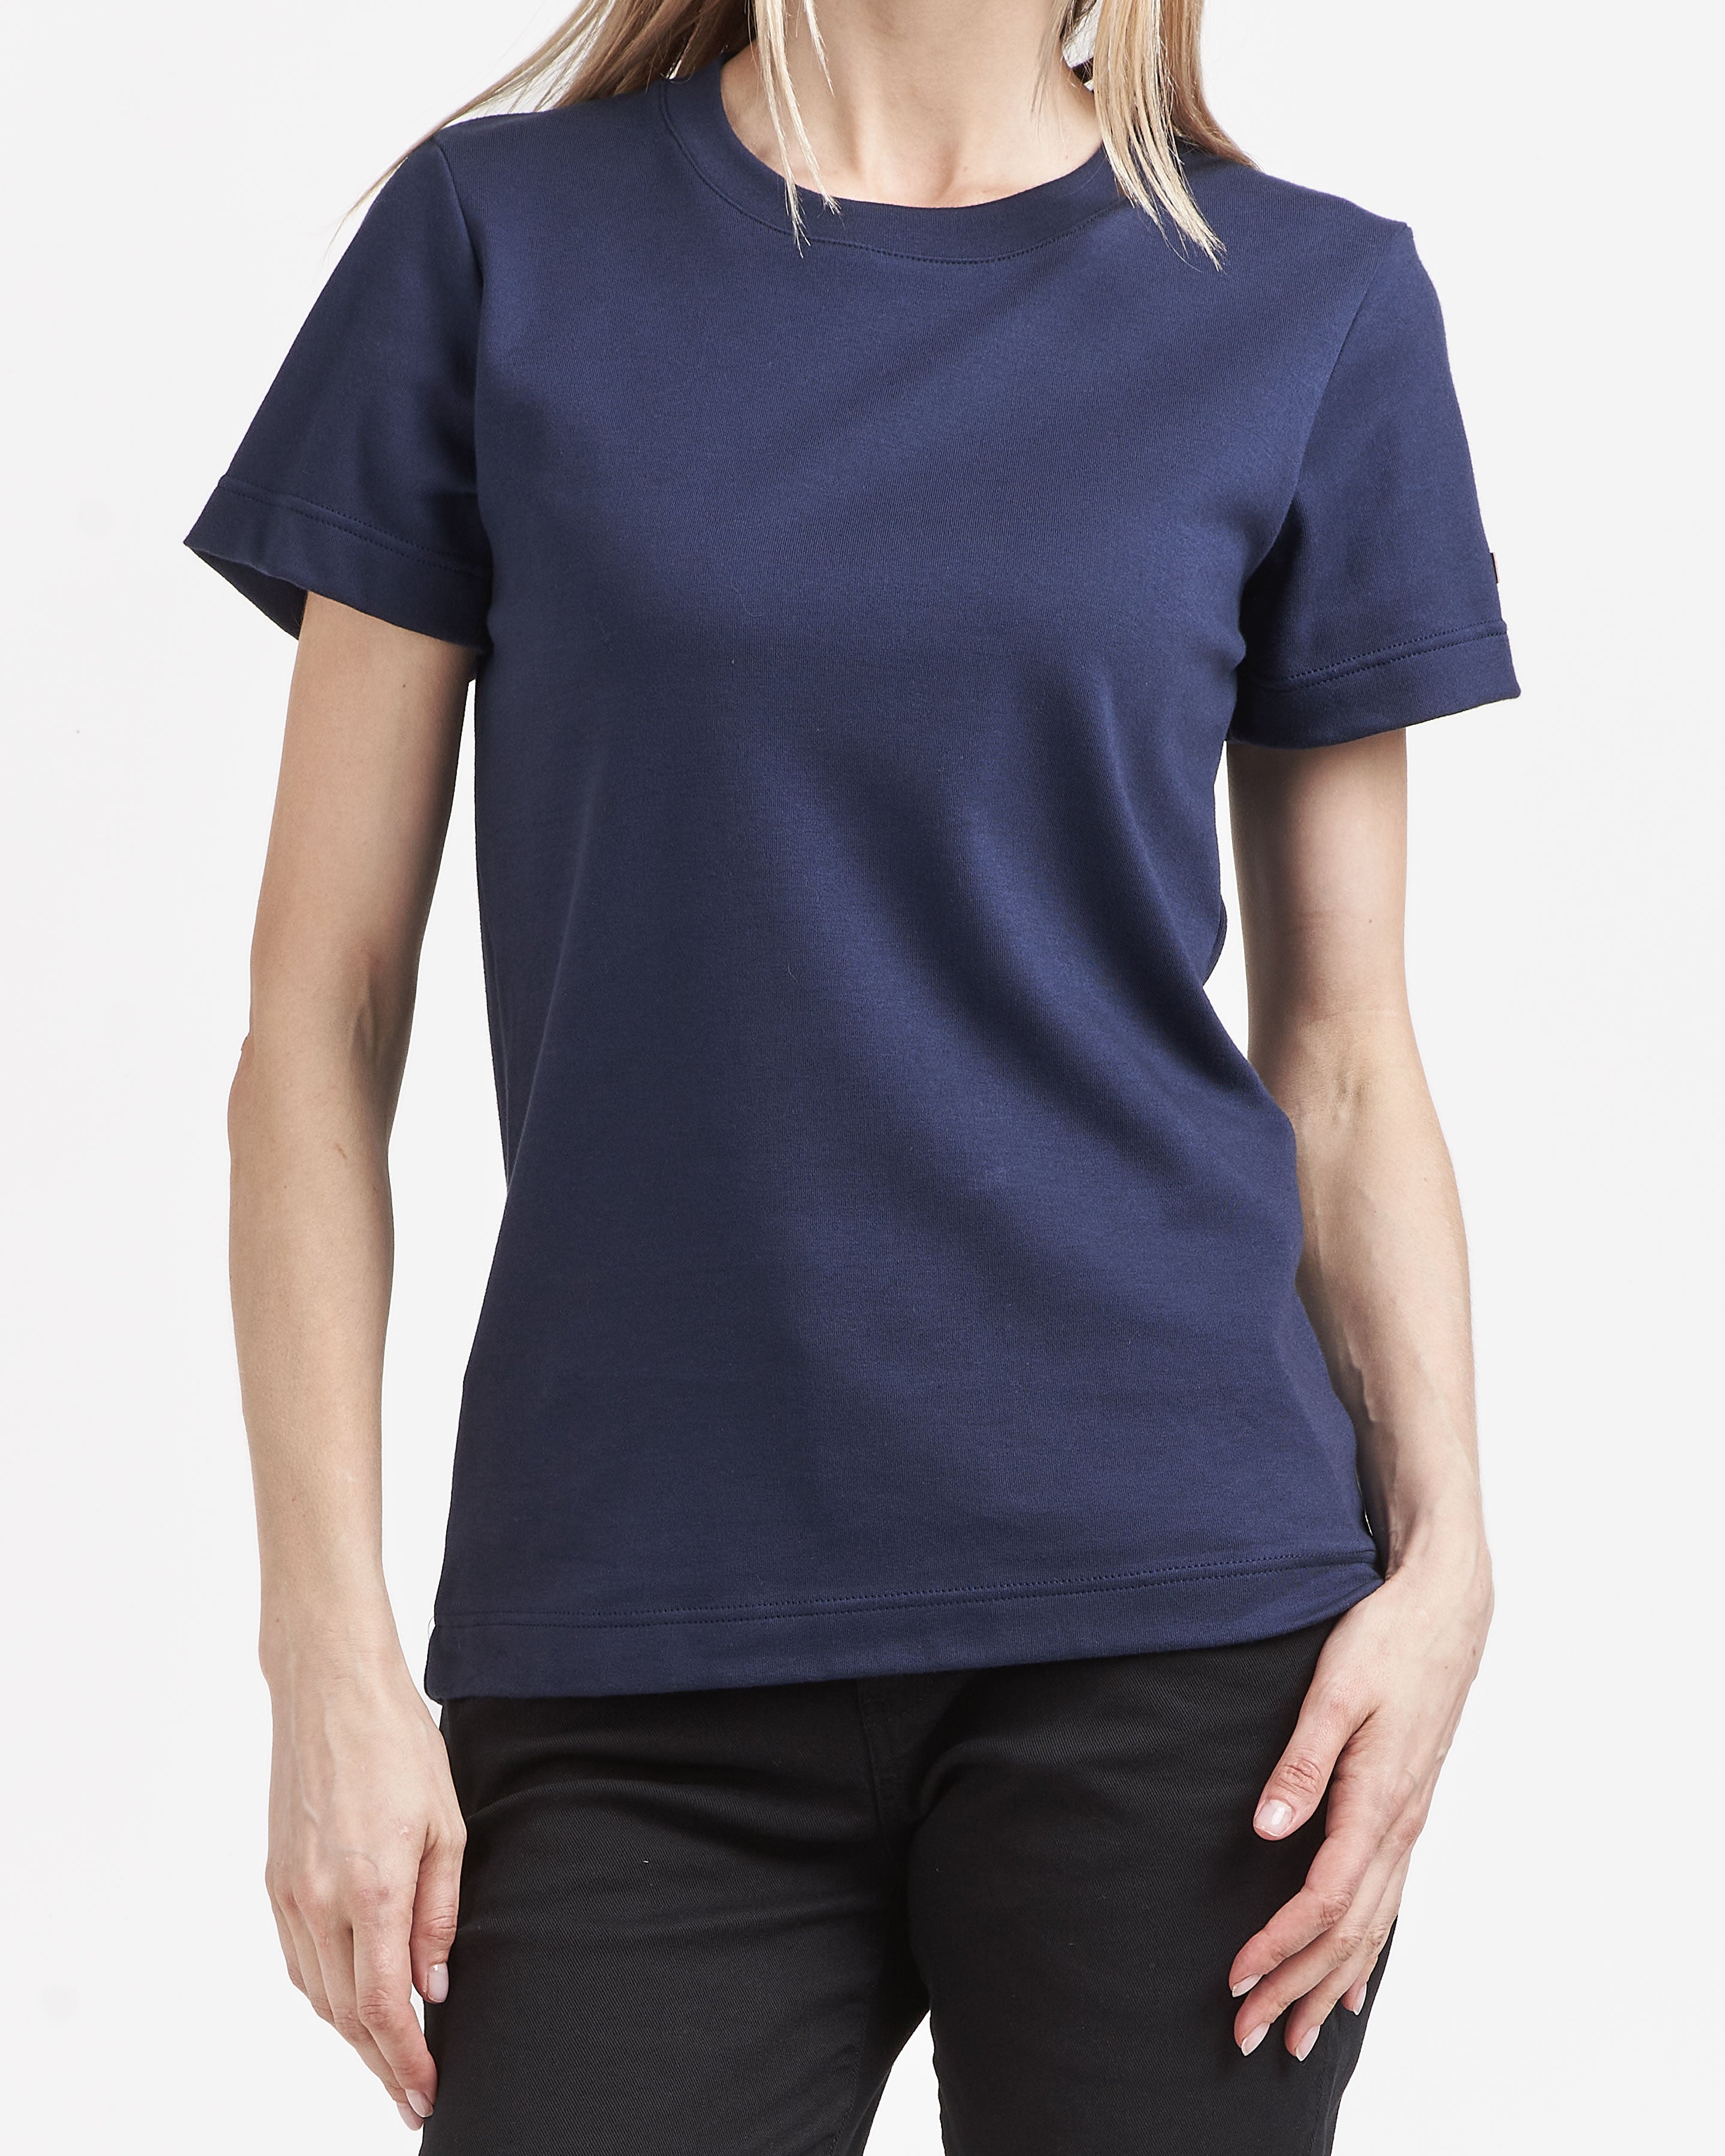 T-shirt femme 100% Coton Bio Bleu Marine – Atelier Tuffery